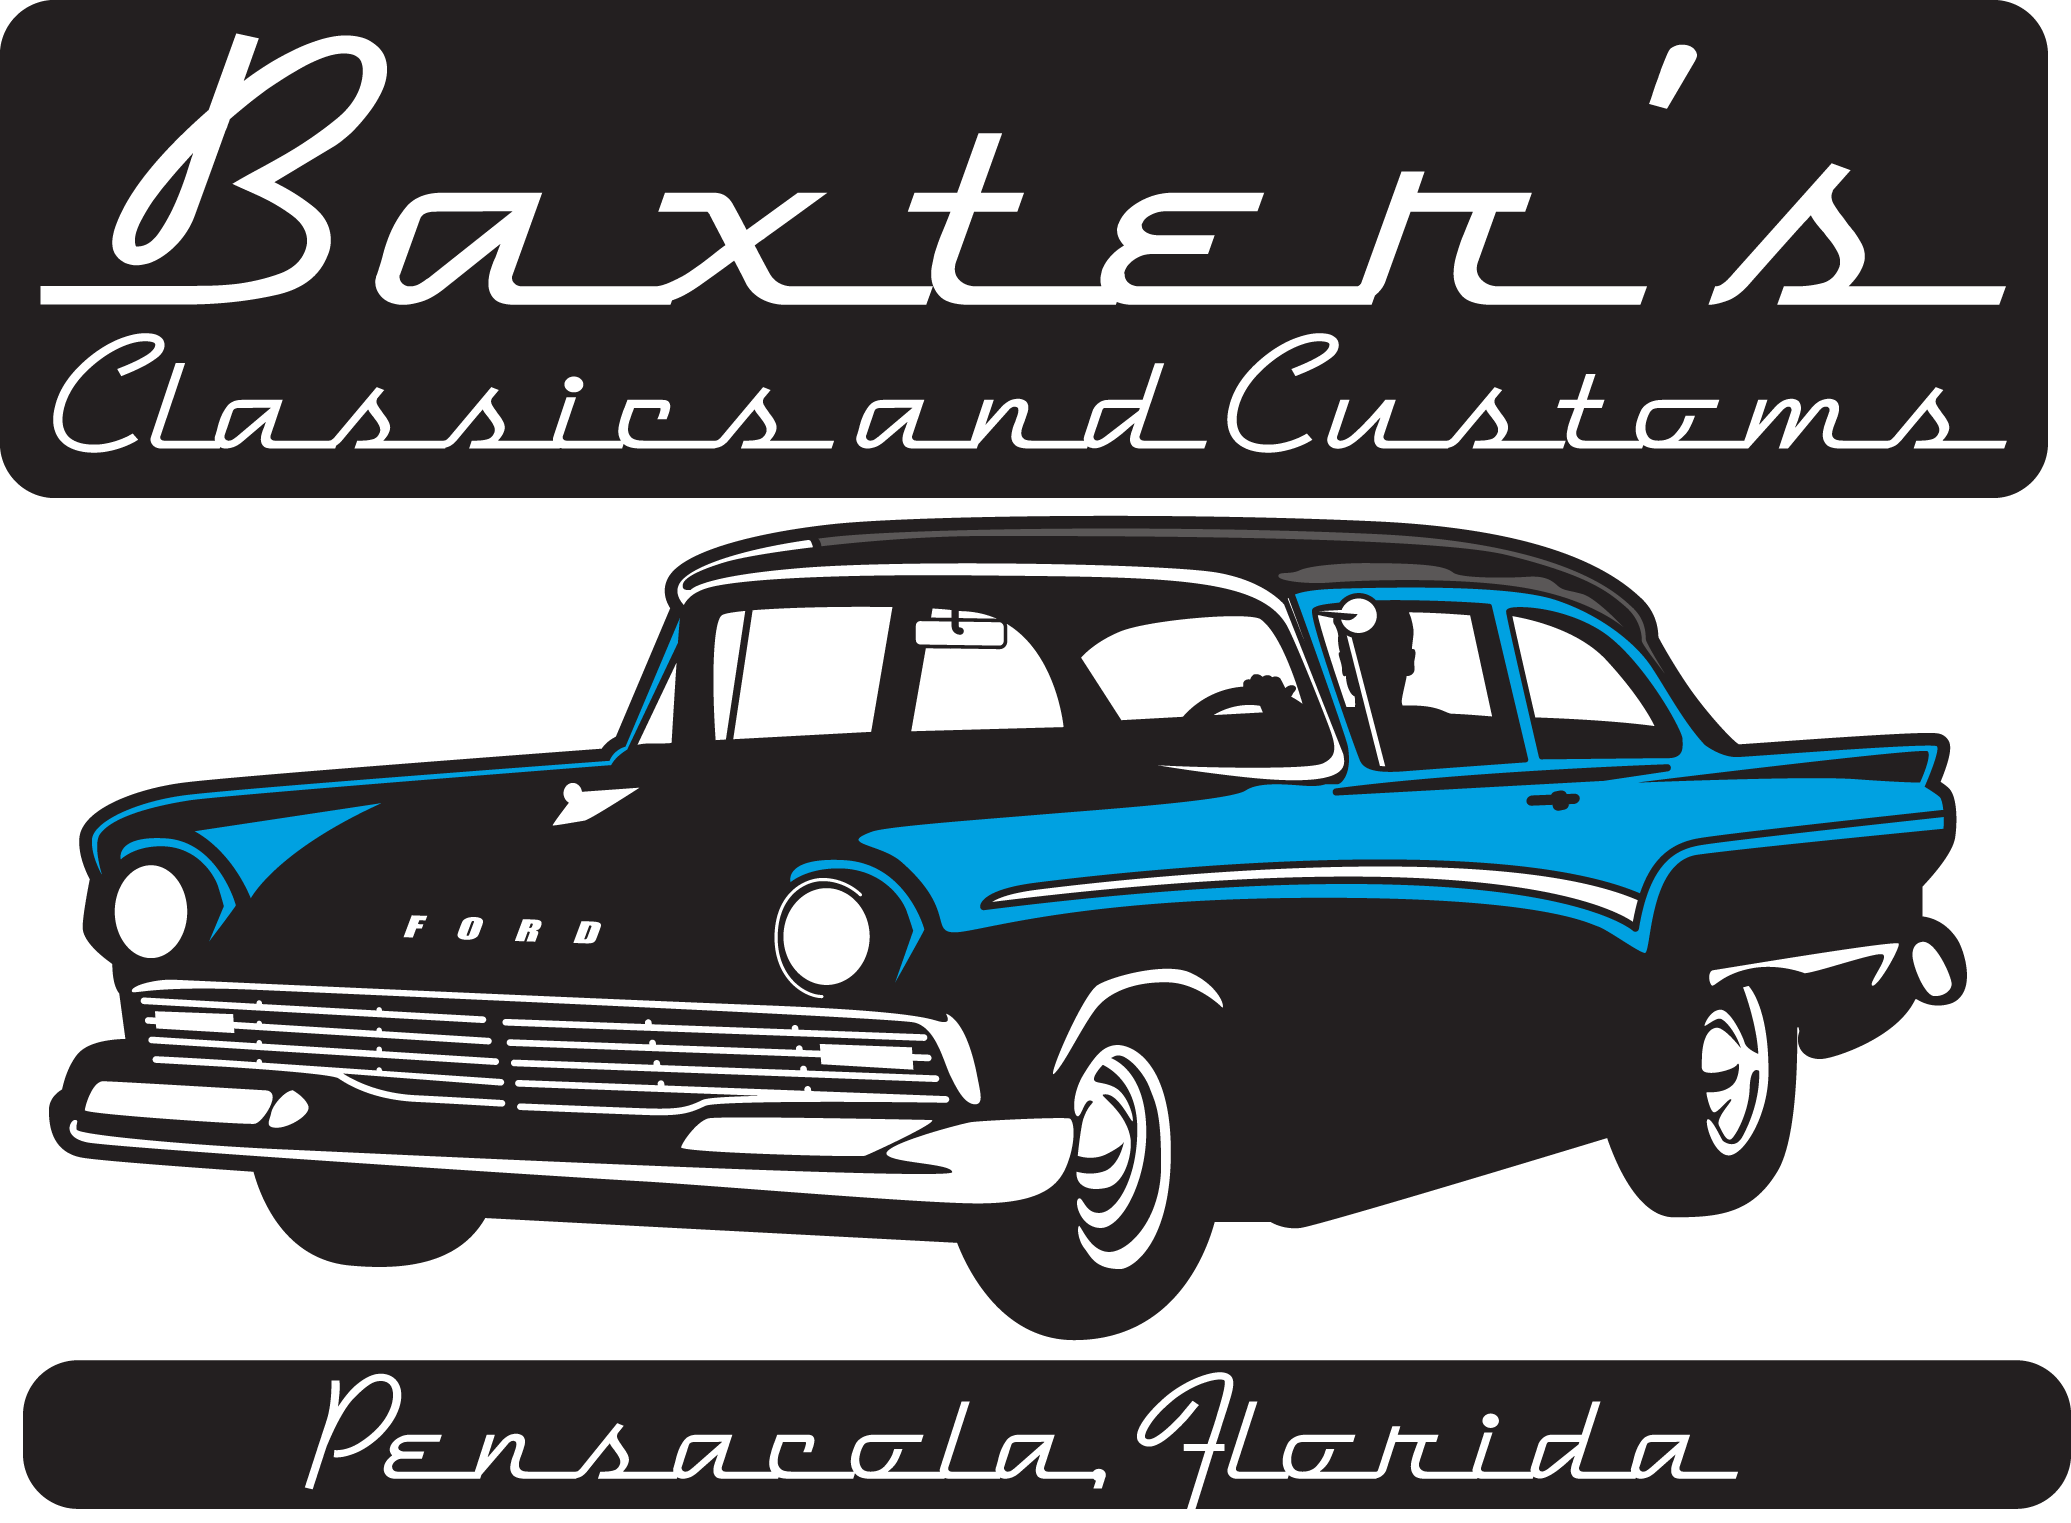 baxter-s-classics-and-customs